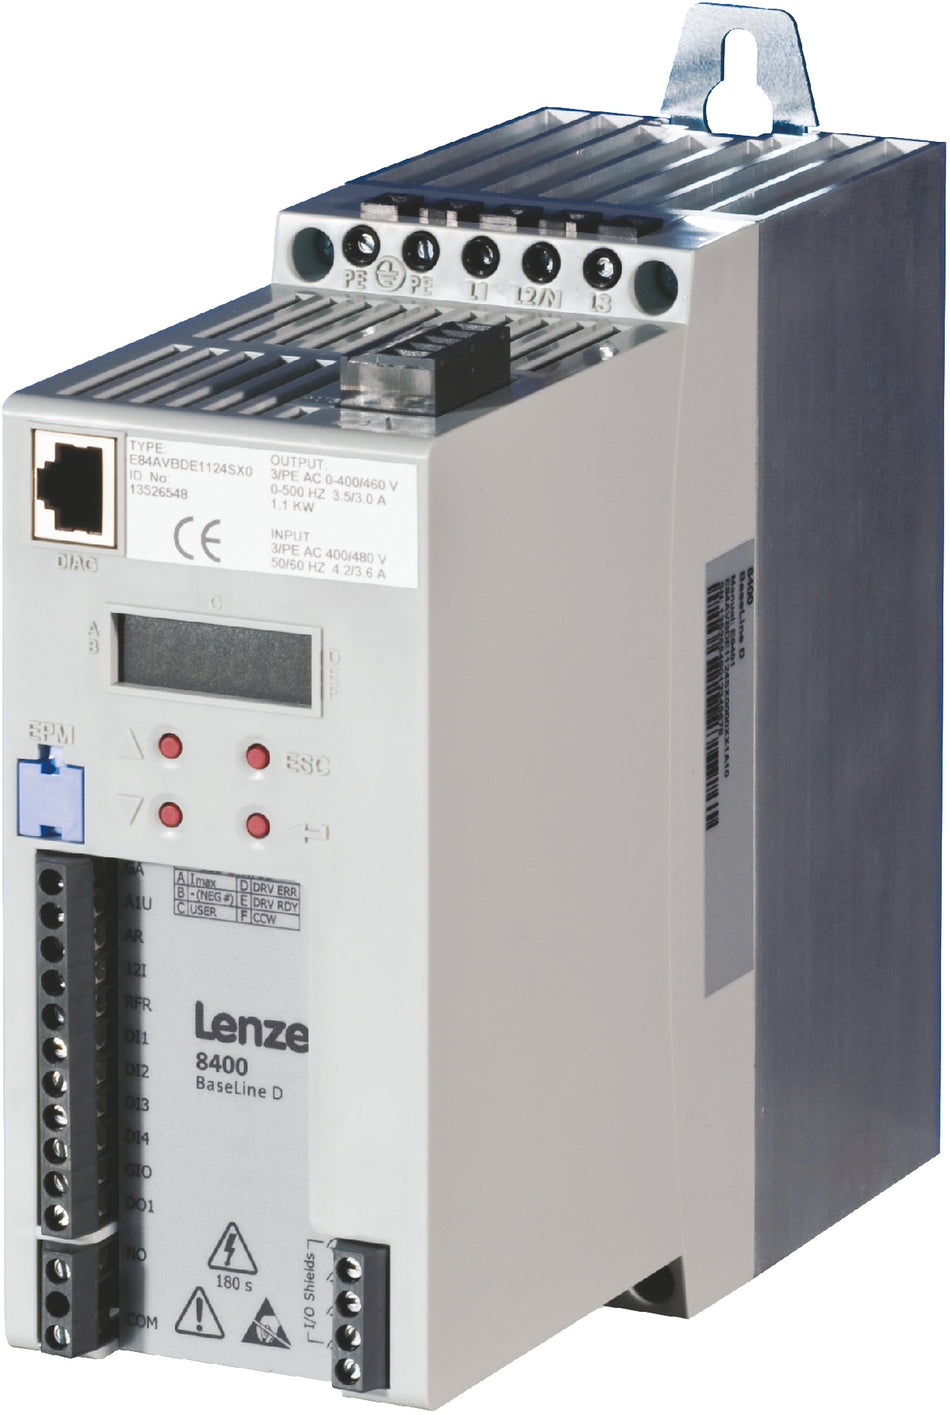 Lenze Inverter Drives 8400 BaseLine -  E84AVBDE1524SX0XX3A34 1.5 kW